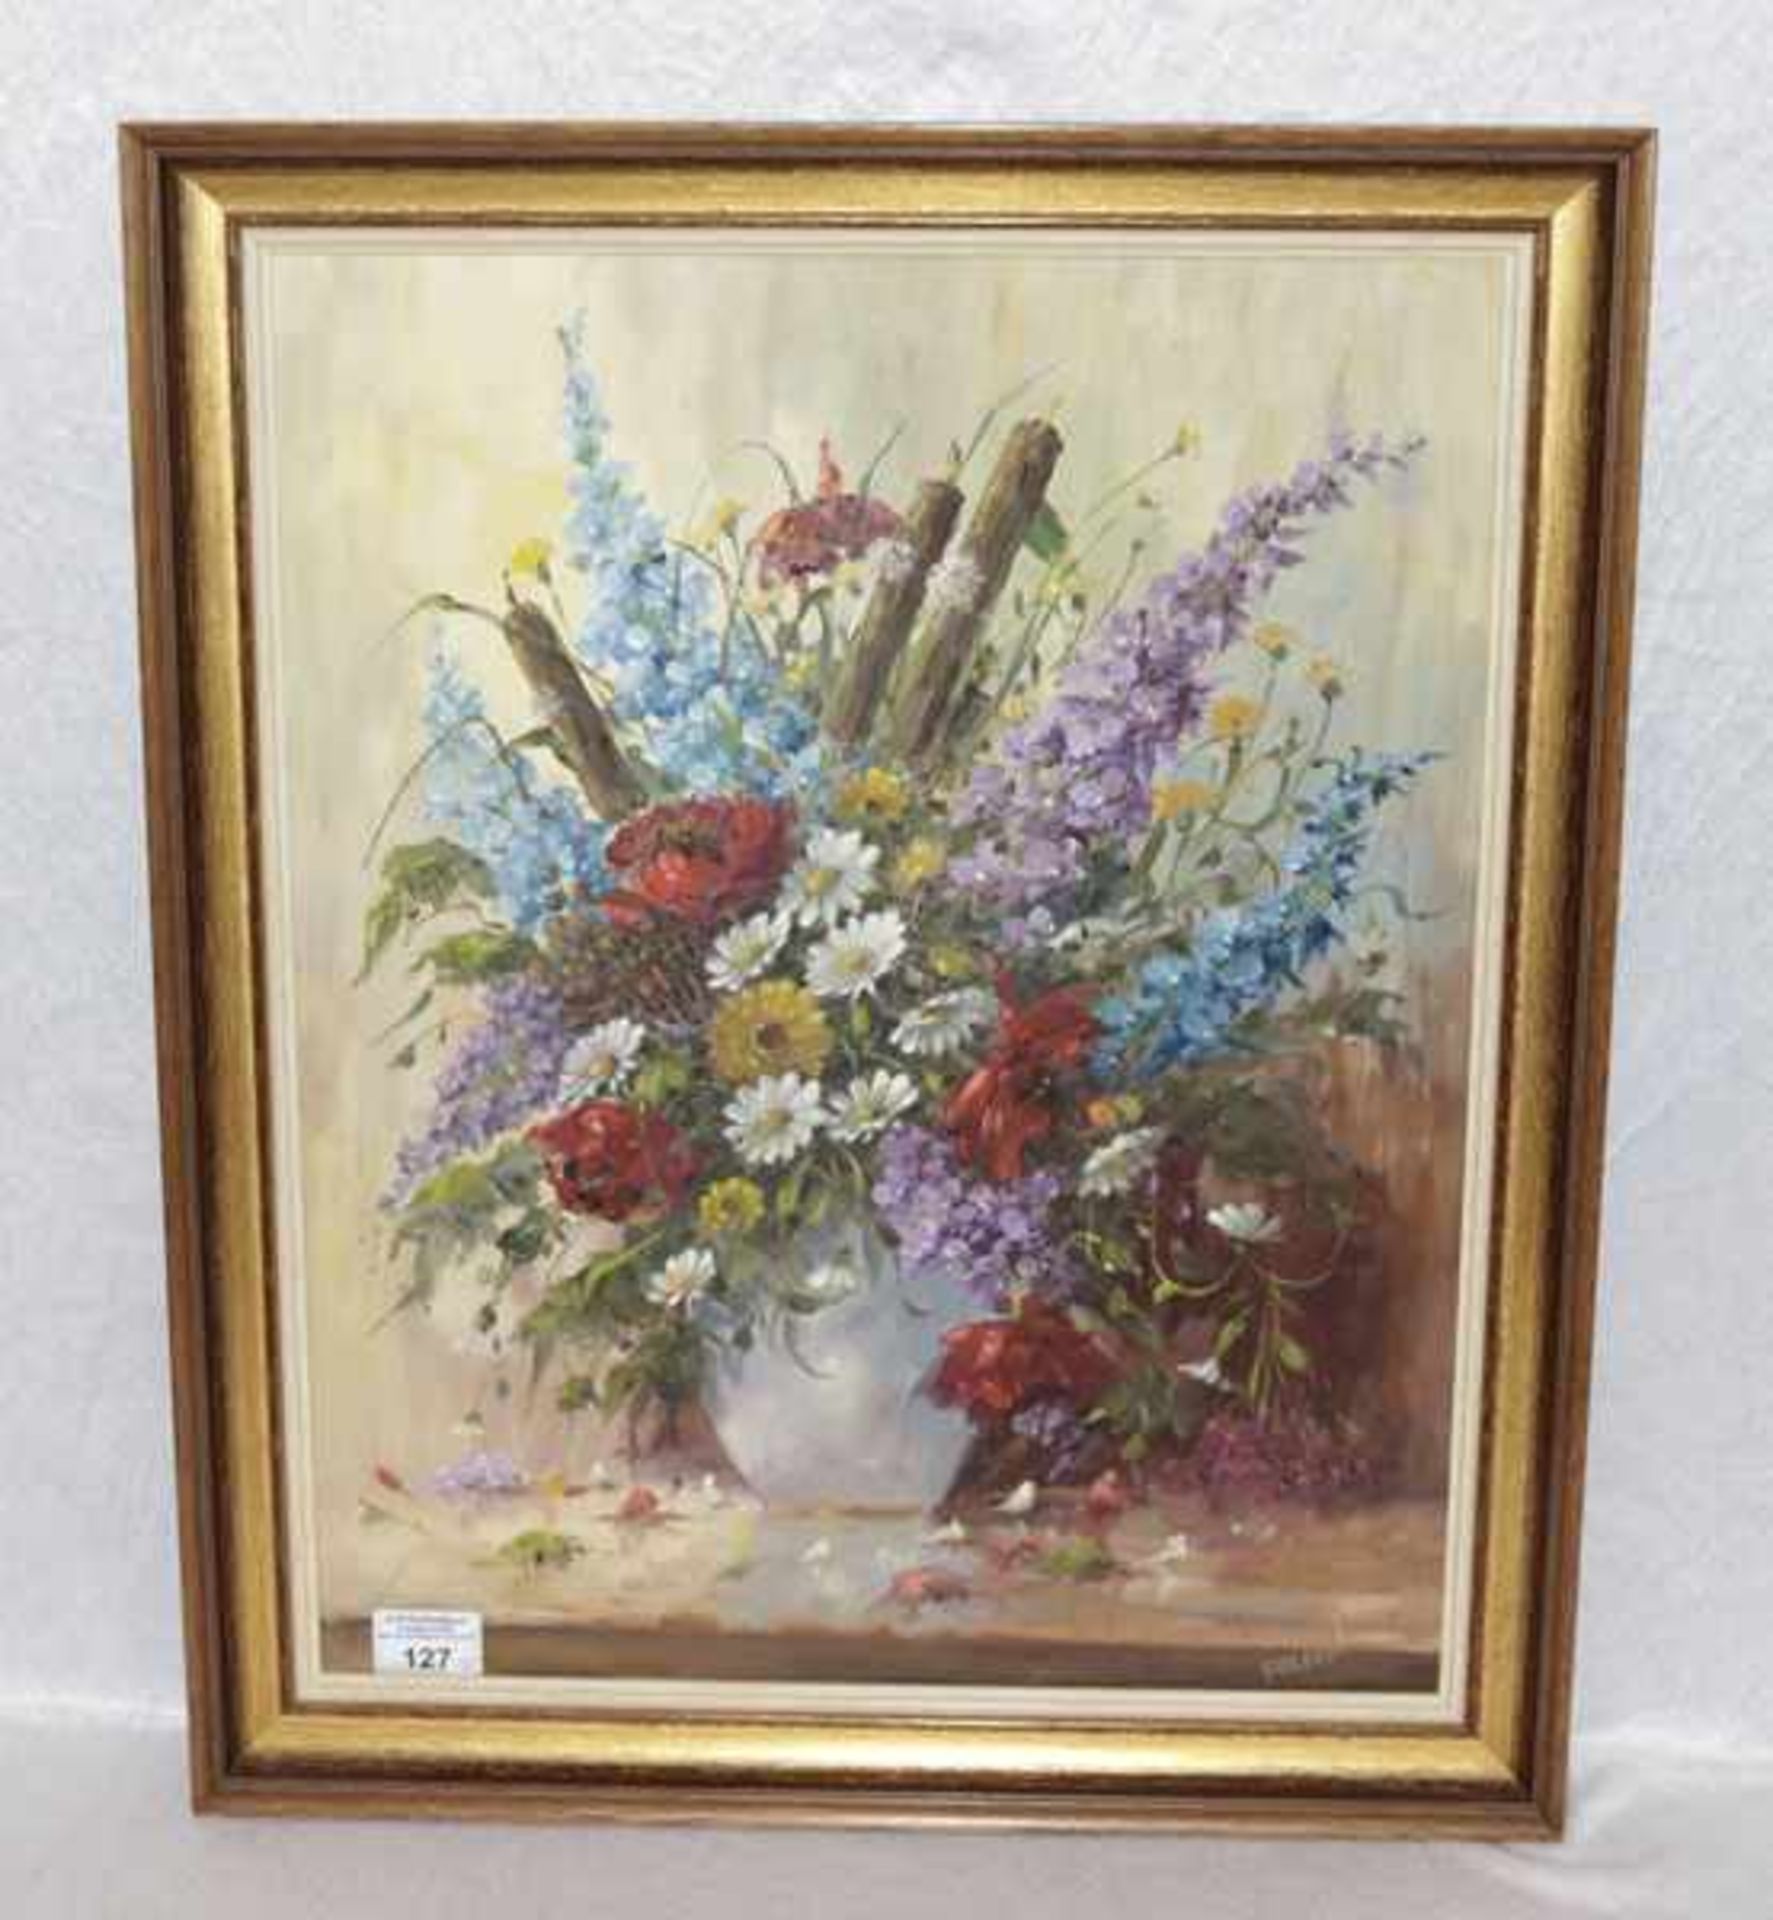 Gemälde ÖL/LW 'Sommerblumen in Vase', signiert Felden, gerahmt, incl. Rahmen 58 cm x 47 cm